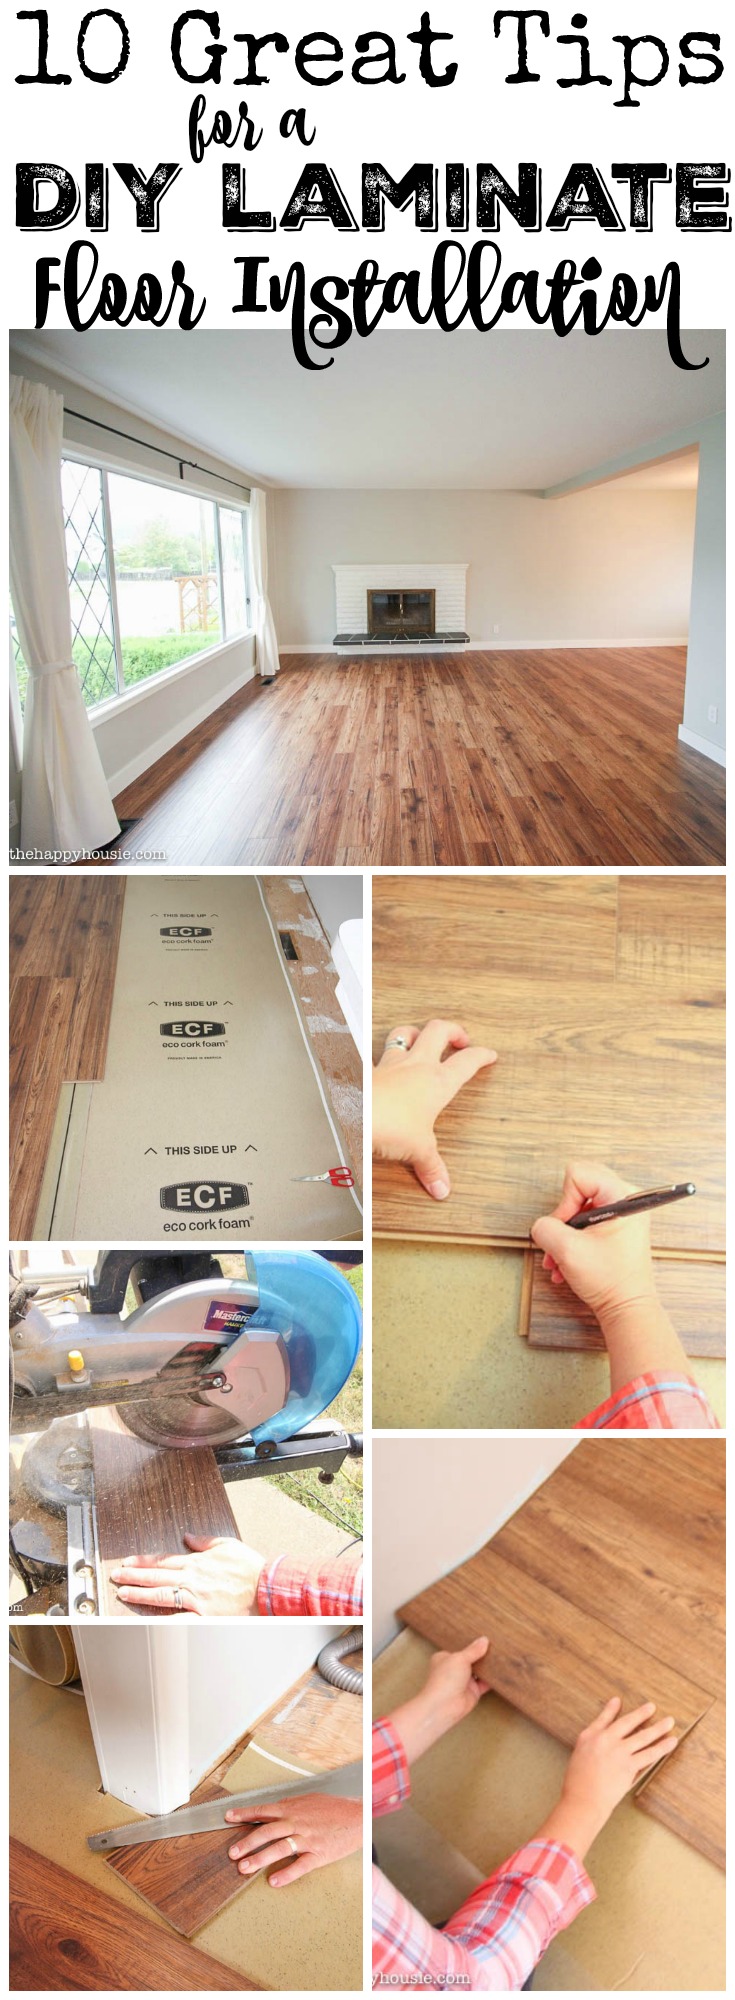 Diy Laminate Flooring Installation, Laminate Wood Flooring Installation Tips